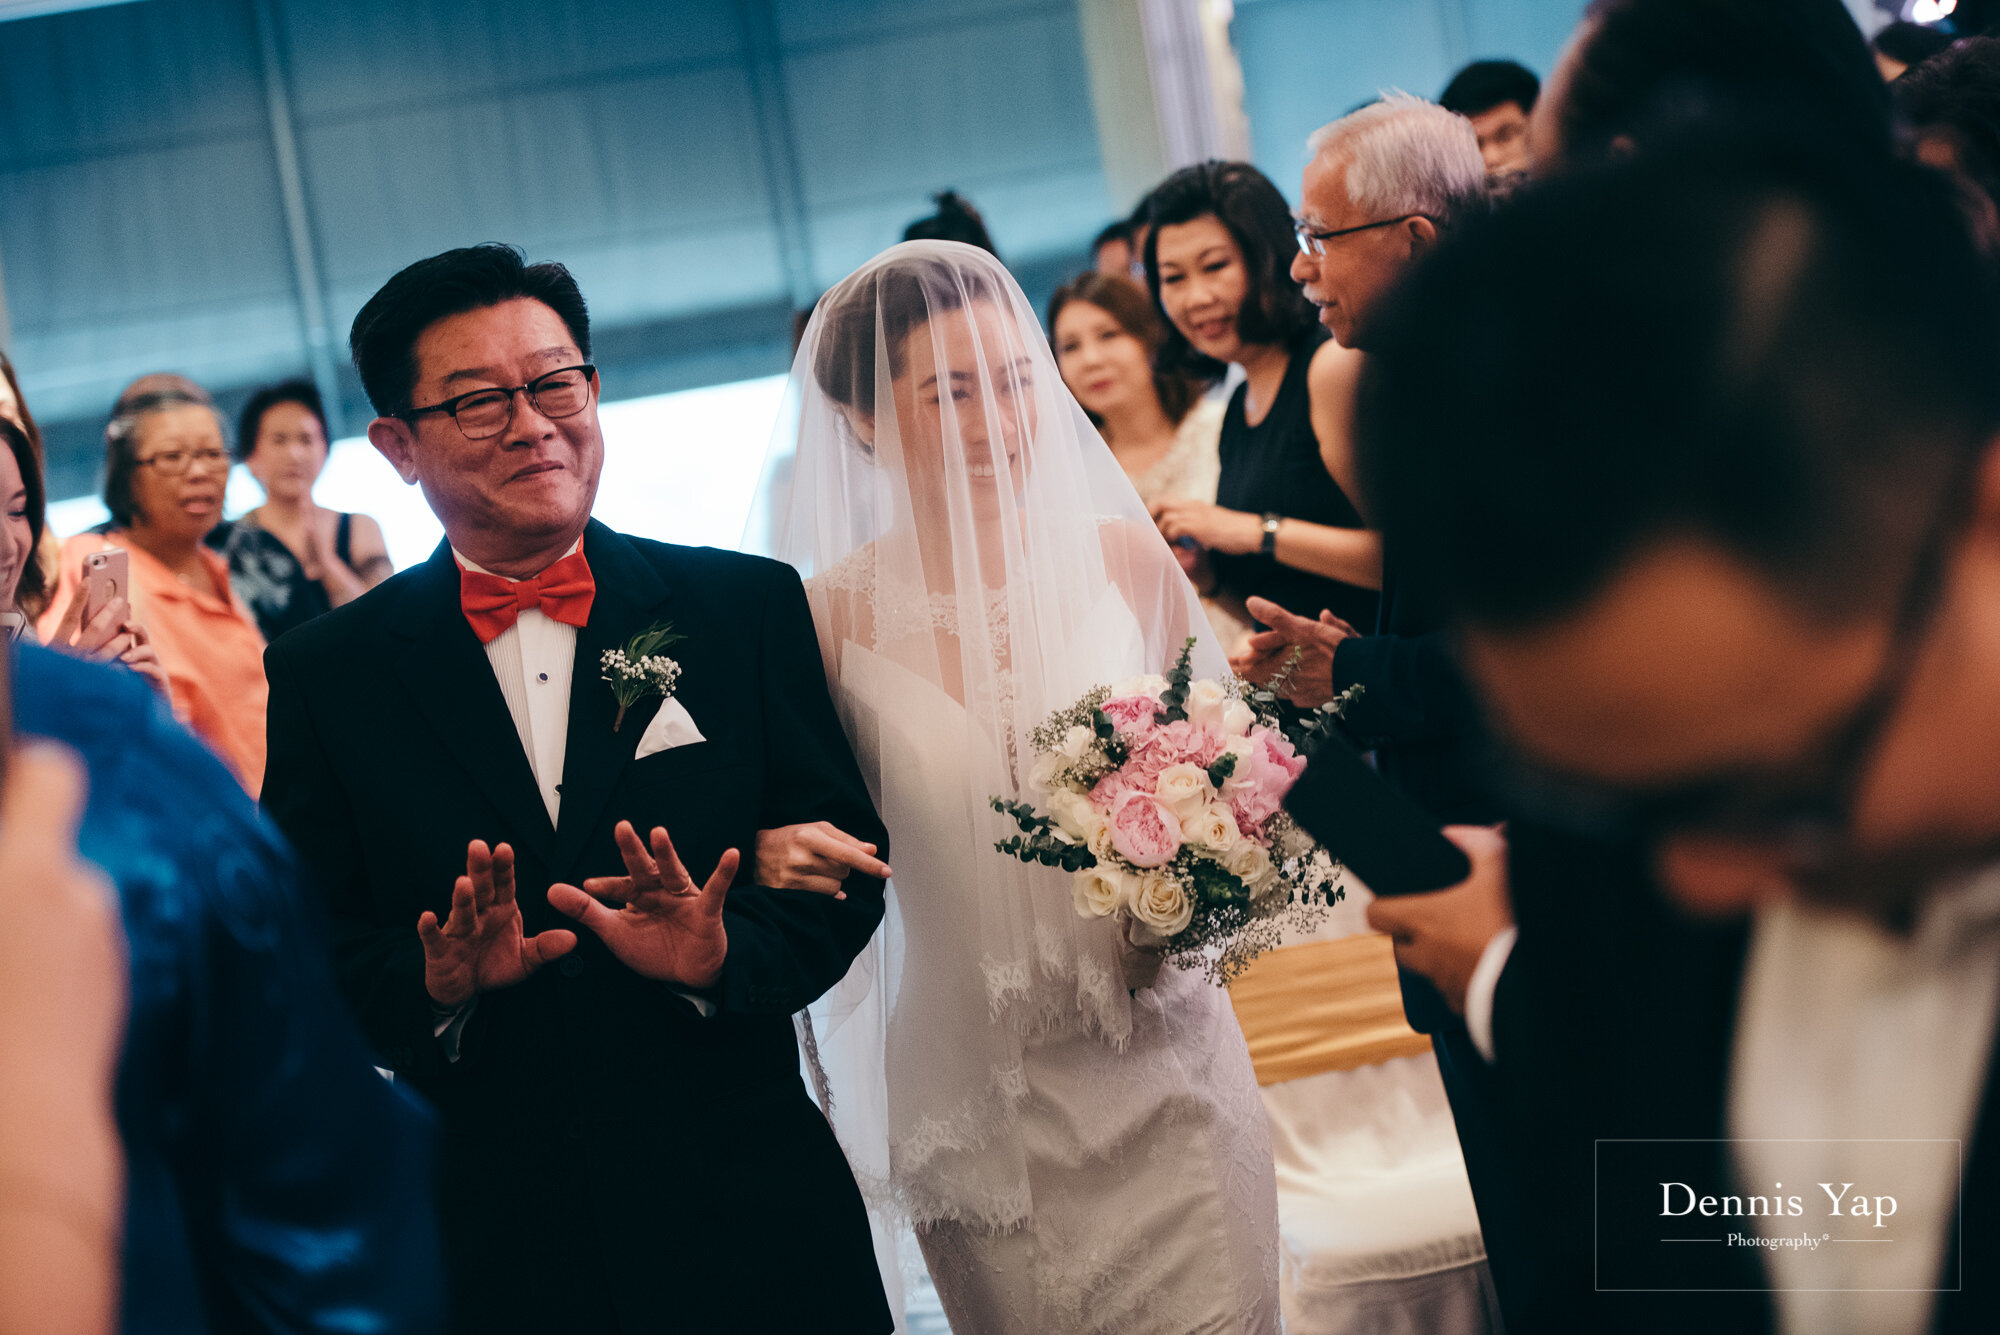 kevan khing wei wedding day hilton kuala lumpur vow exchange ceremony dennis yap photography malaysia top wedding photographer-11.jpg